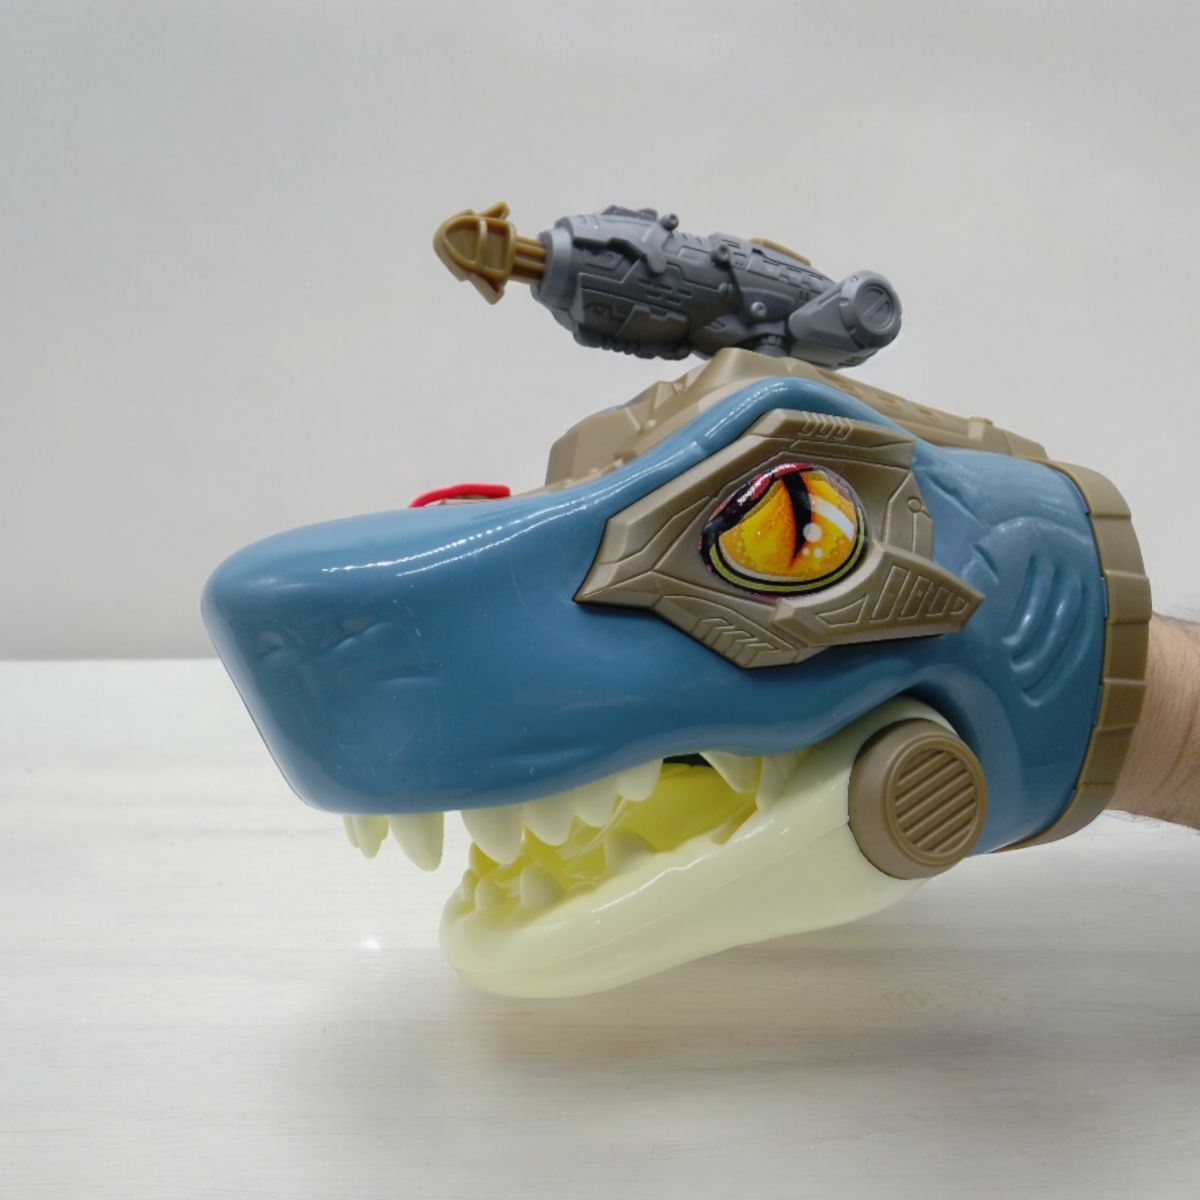 Іграшка "Puppet Hand: Dino Shark", стріляє, пар, світло, звук